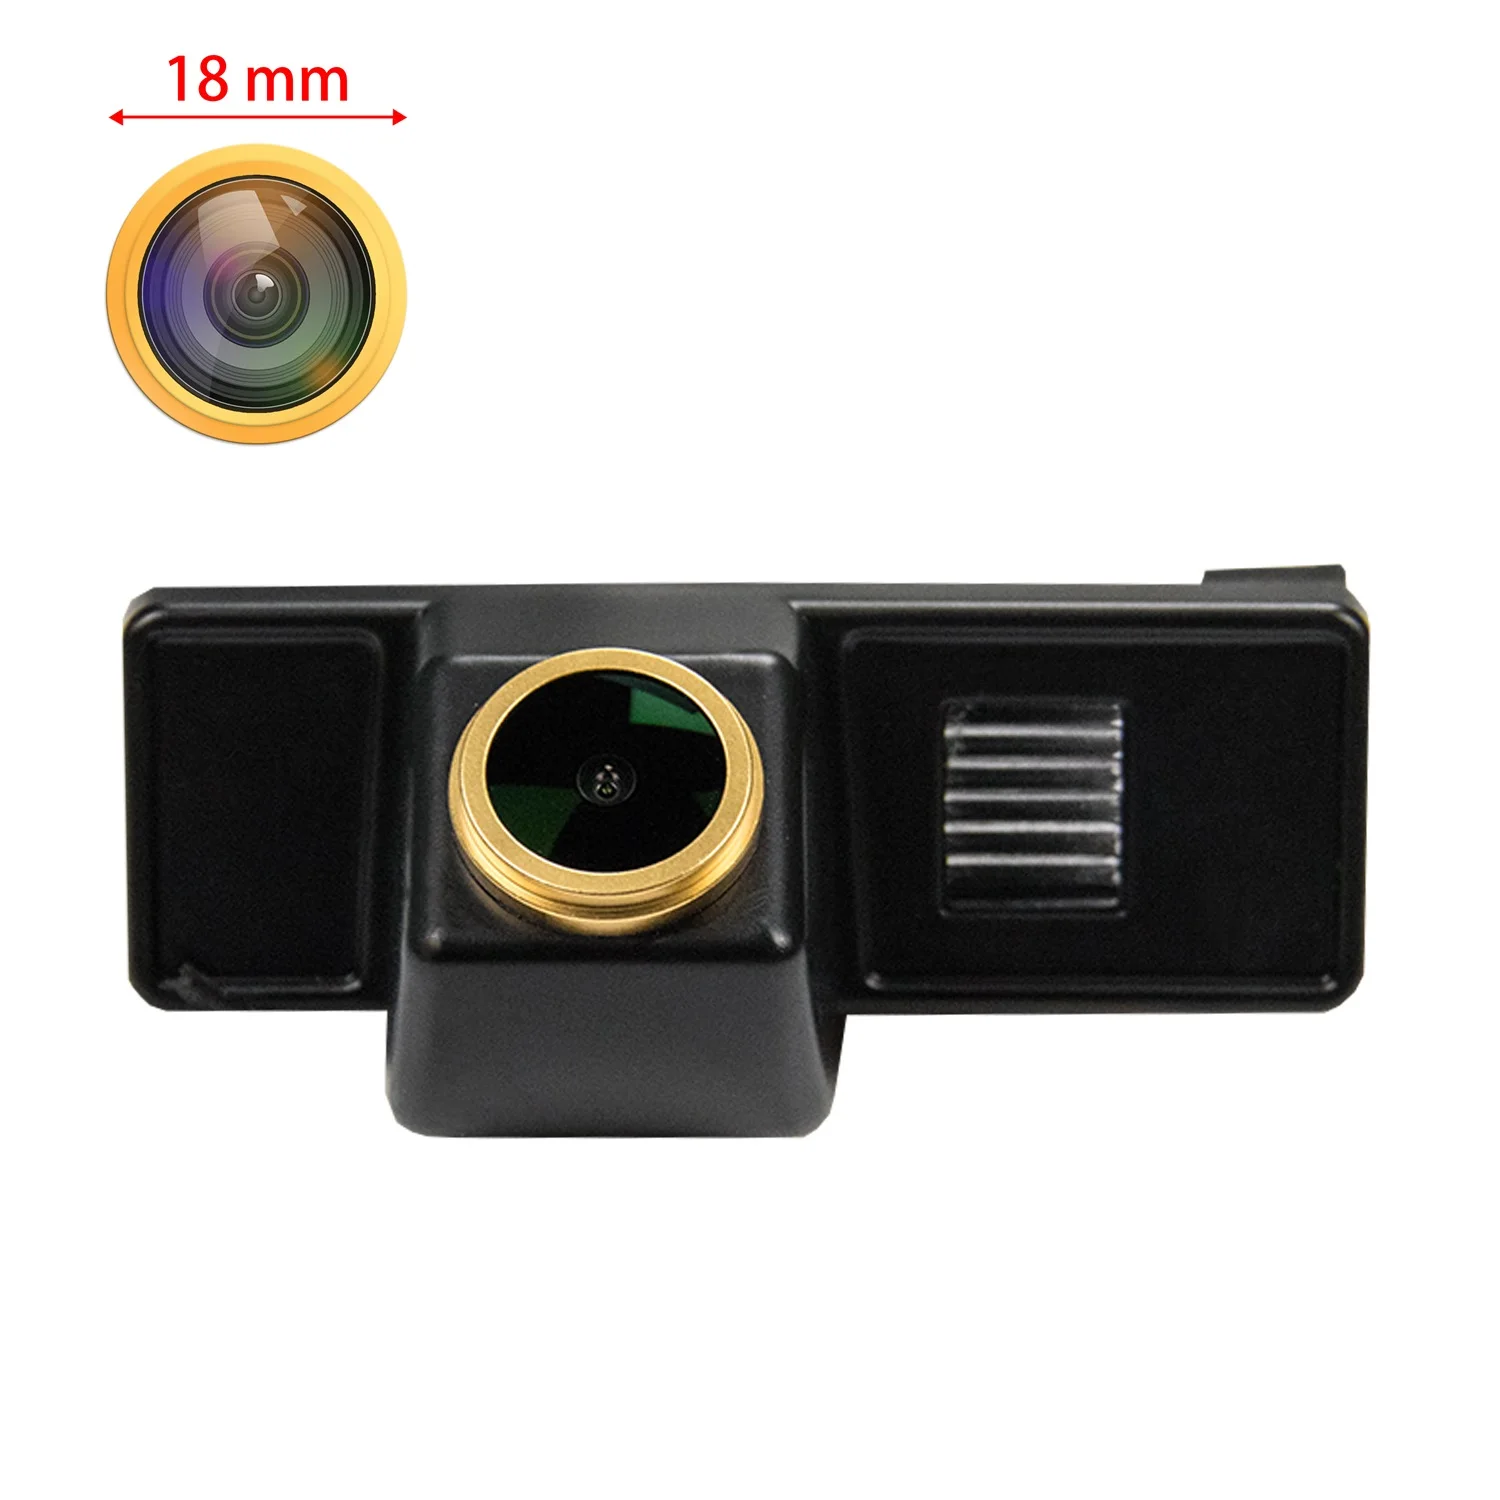 

Misayaee HD Car Rear View Parking Reverse Camera for Mercedes W639 Vito & Viano Van (2003-2014) Night Vision Waterproof